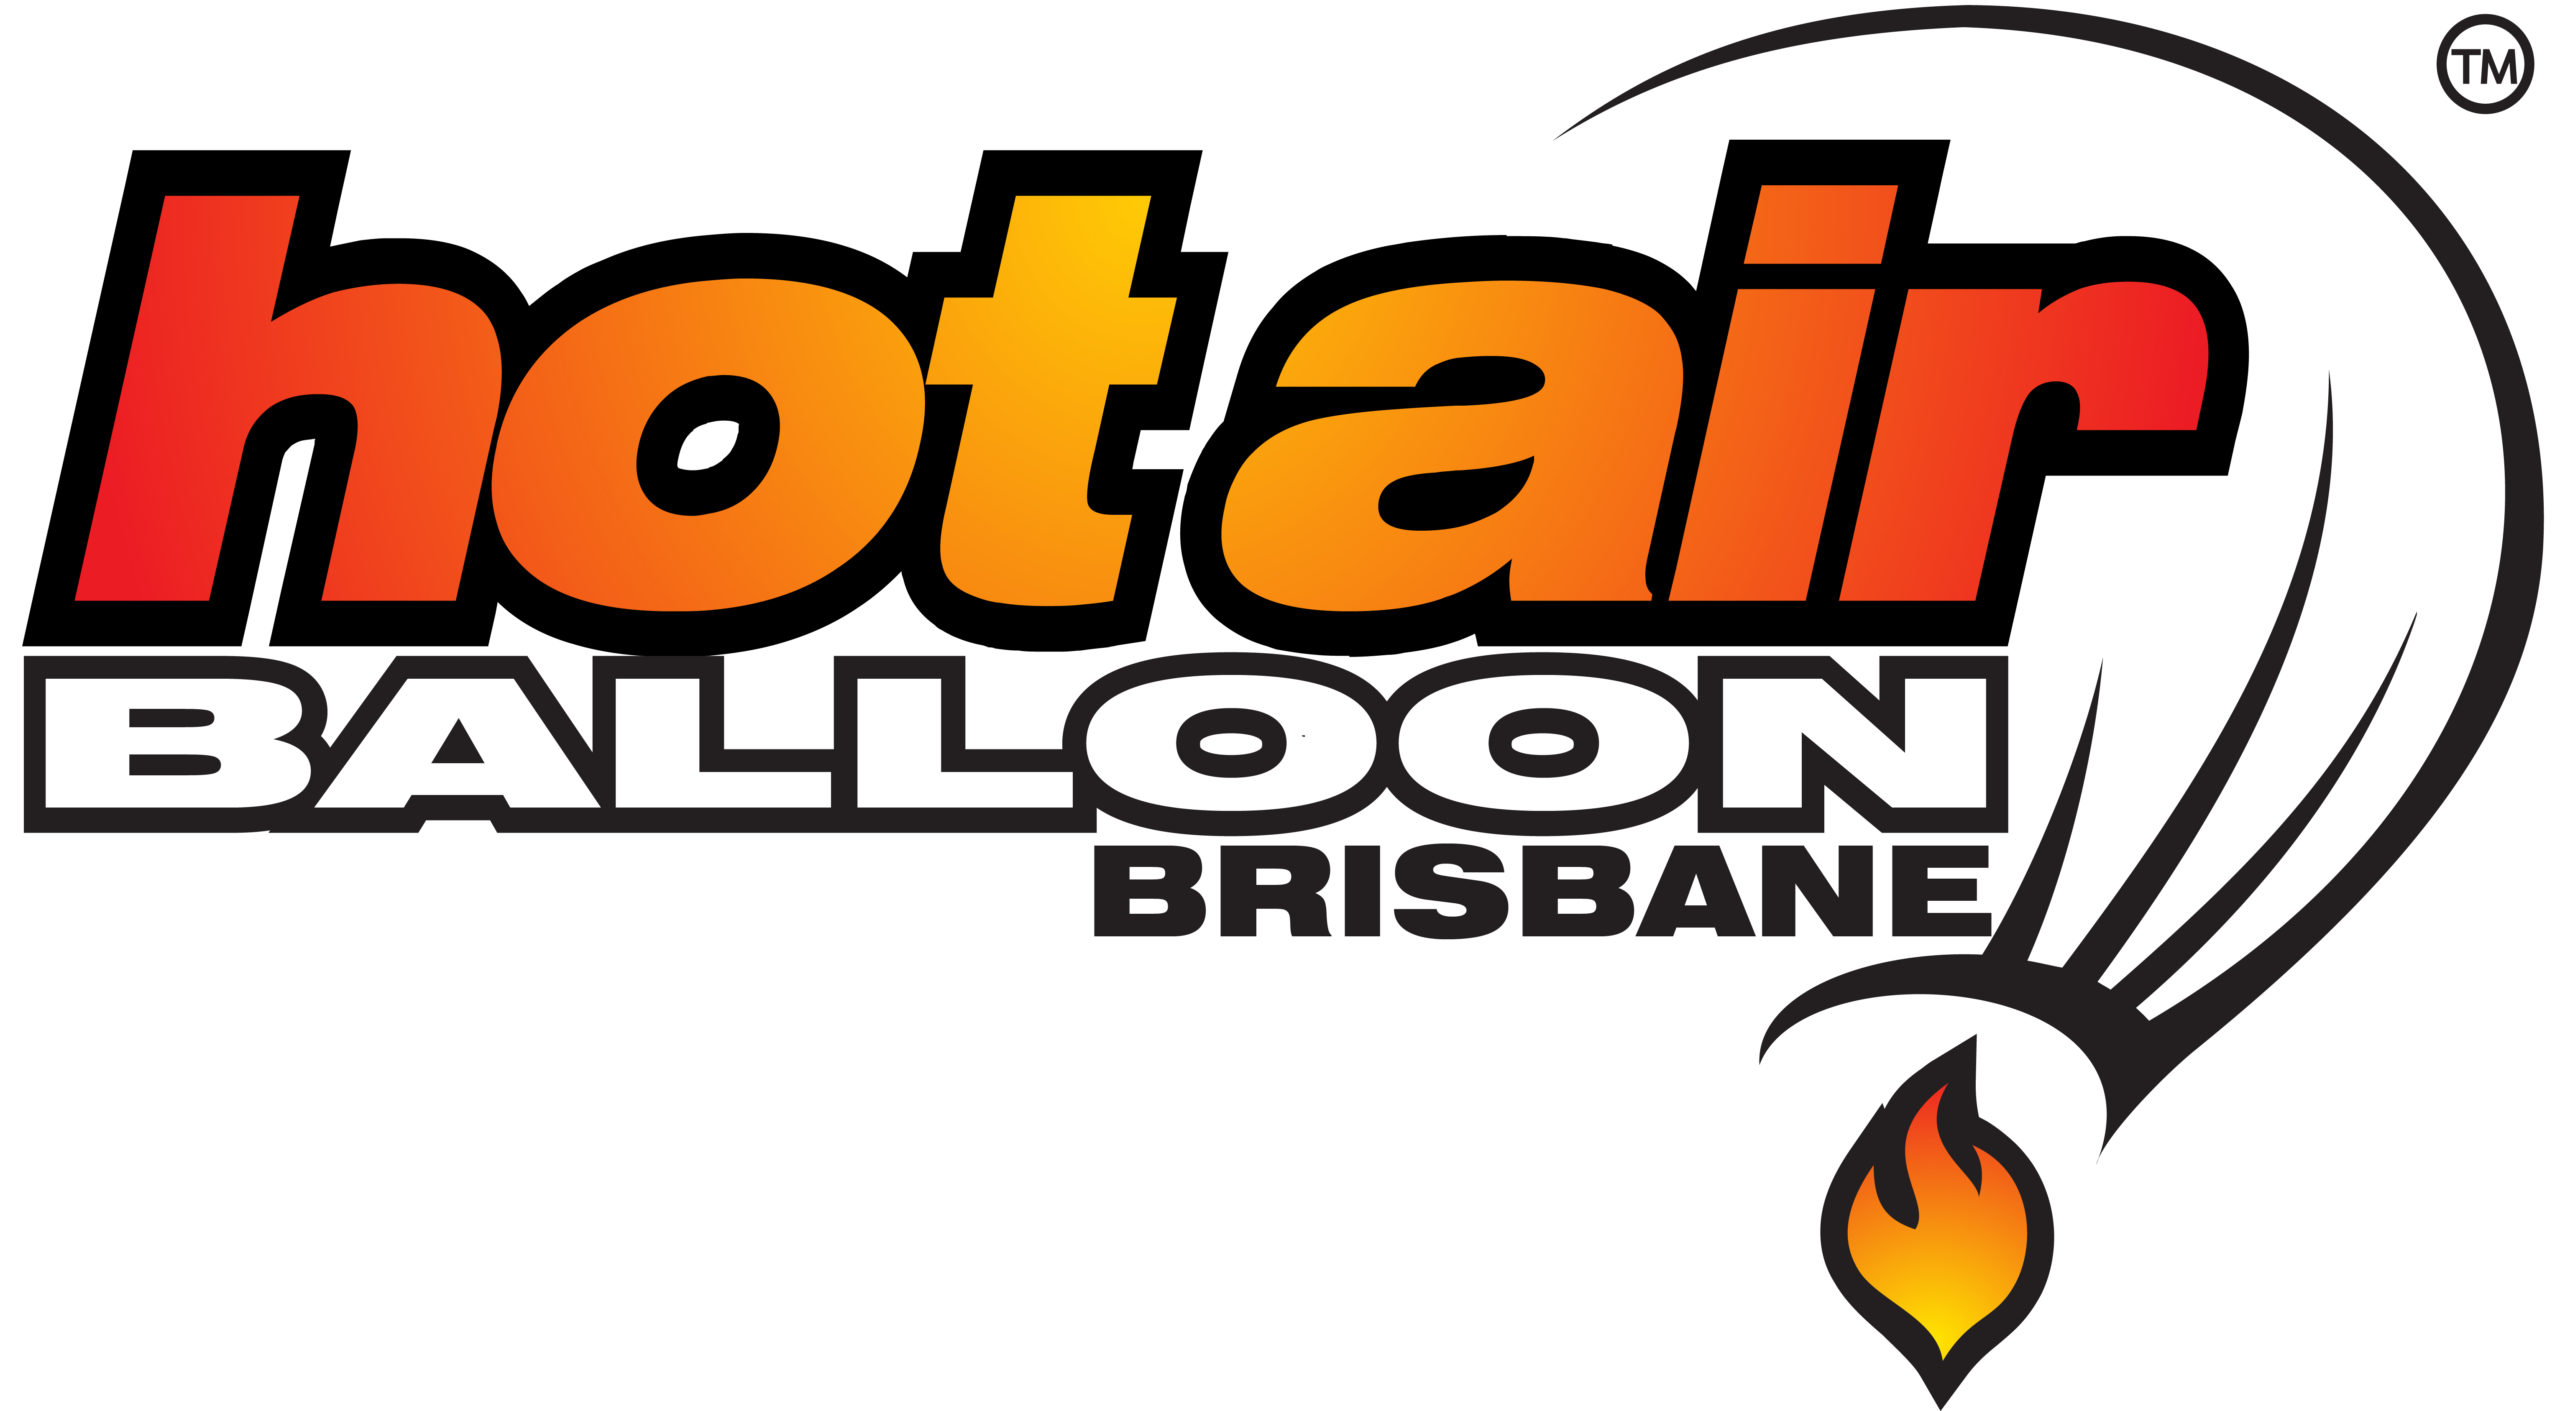 hot air balloon logo